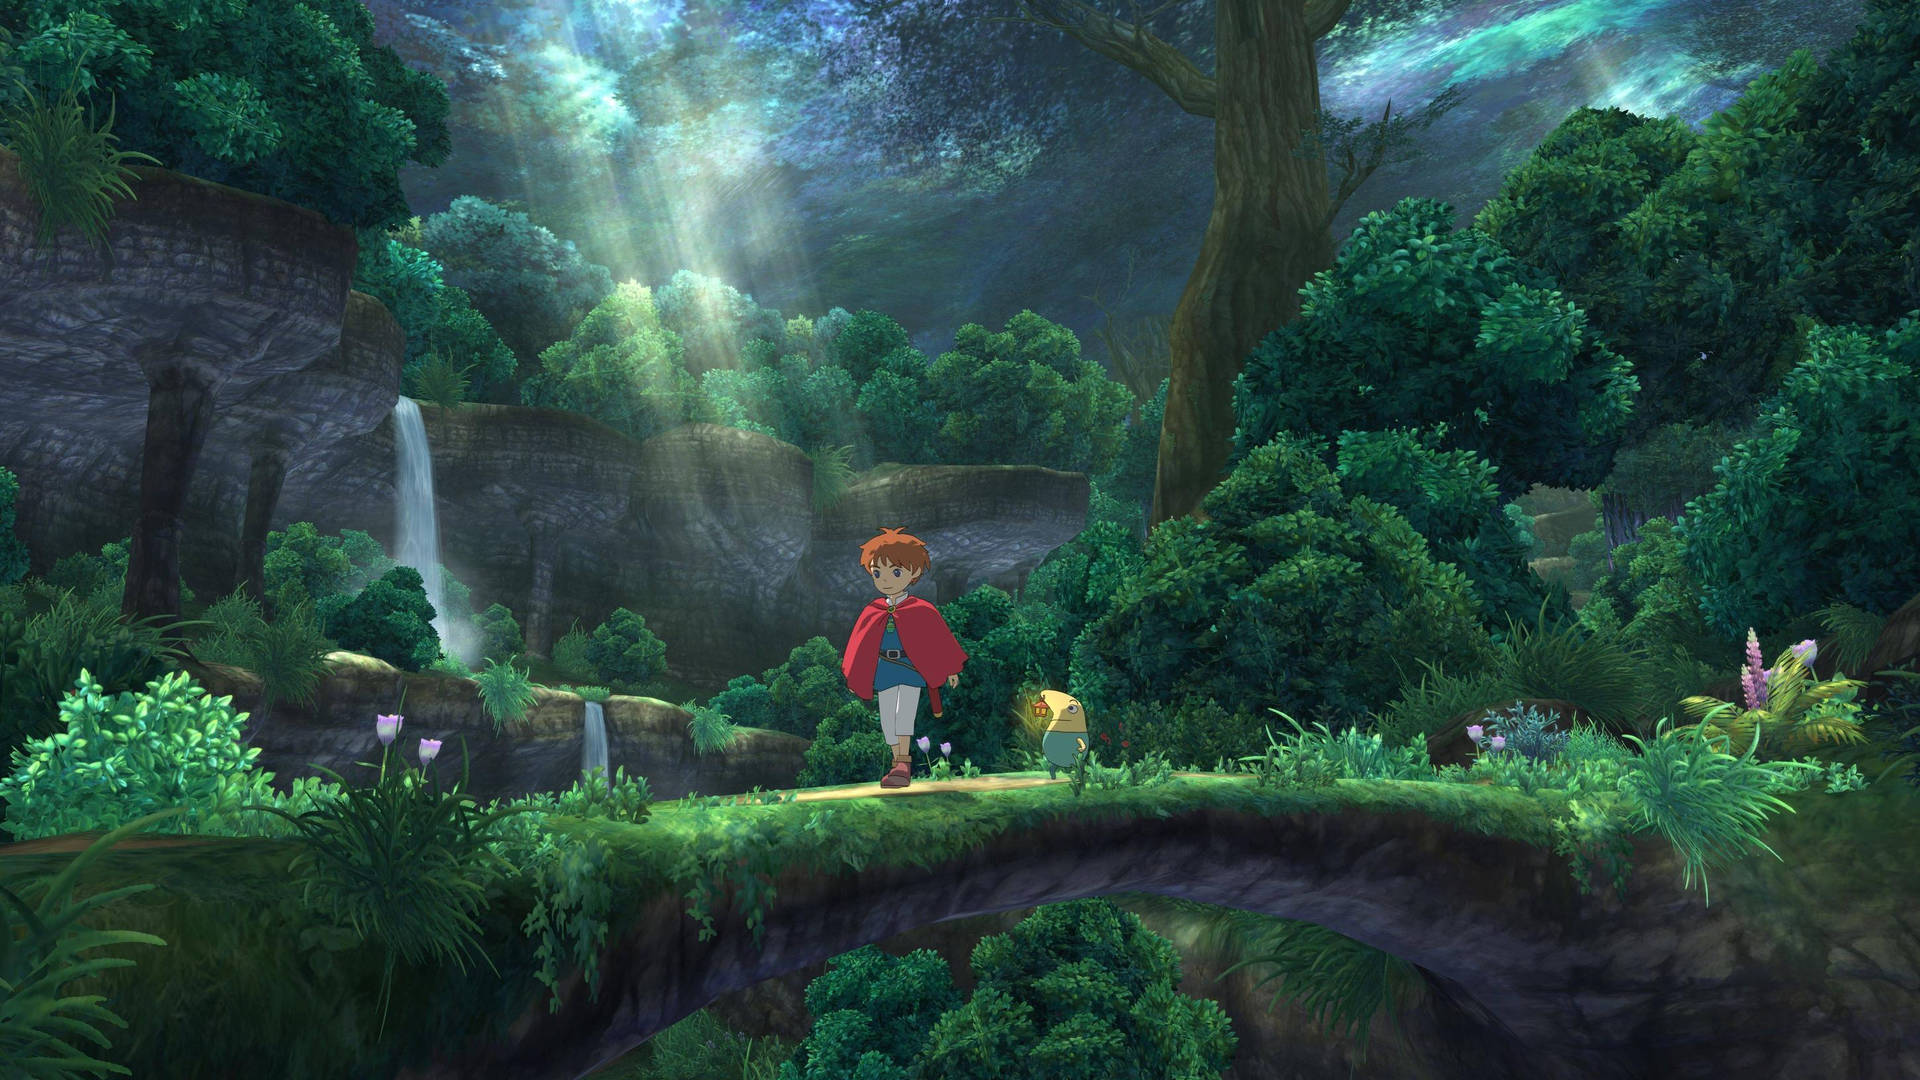 Beautiful Studio Ghibli Scenery Forest